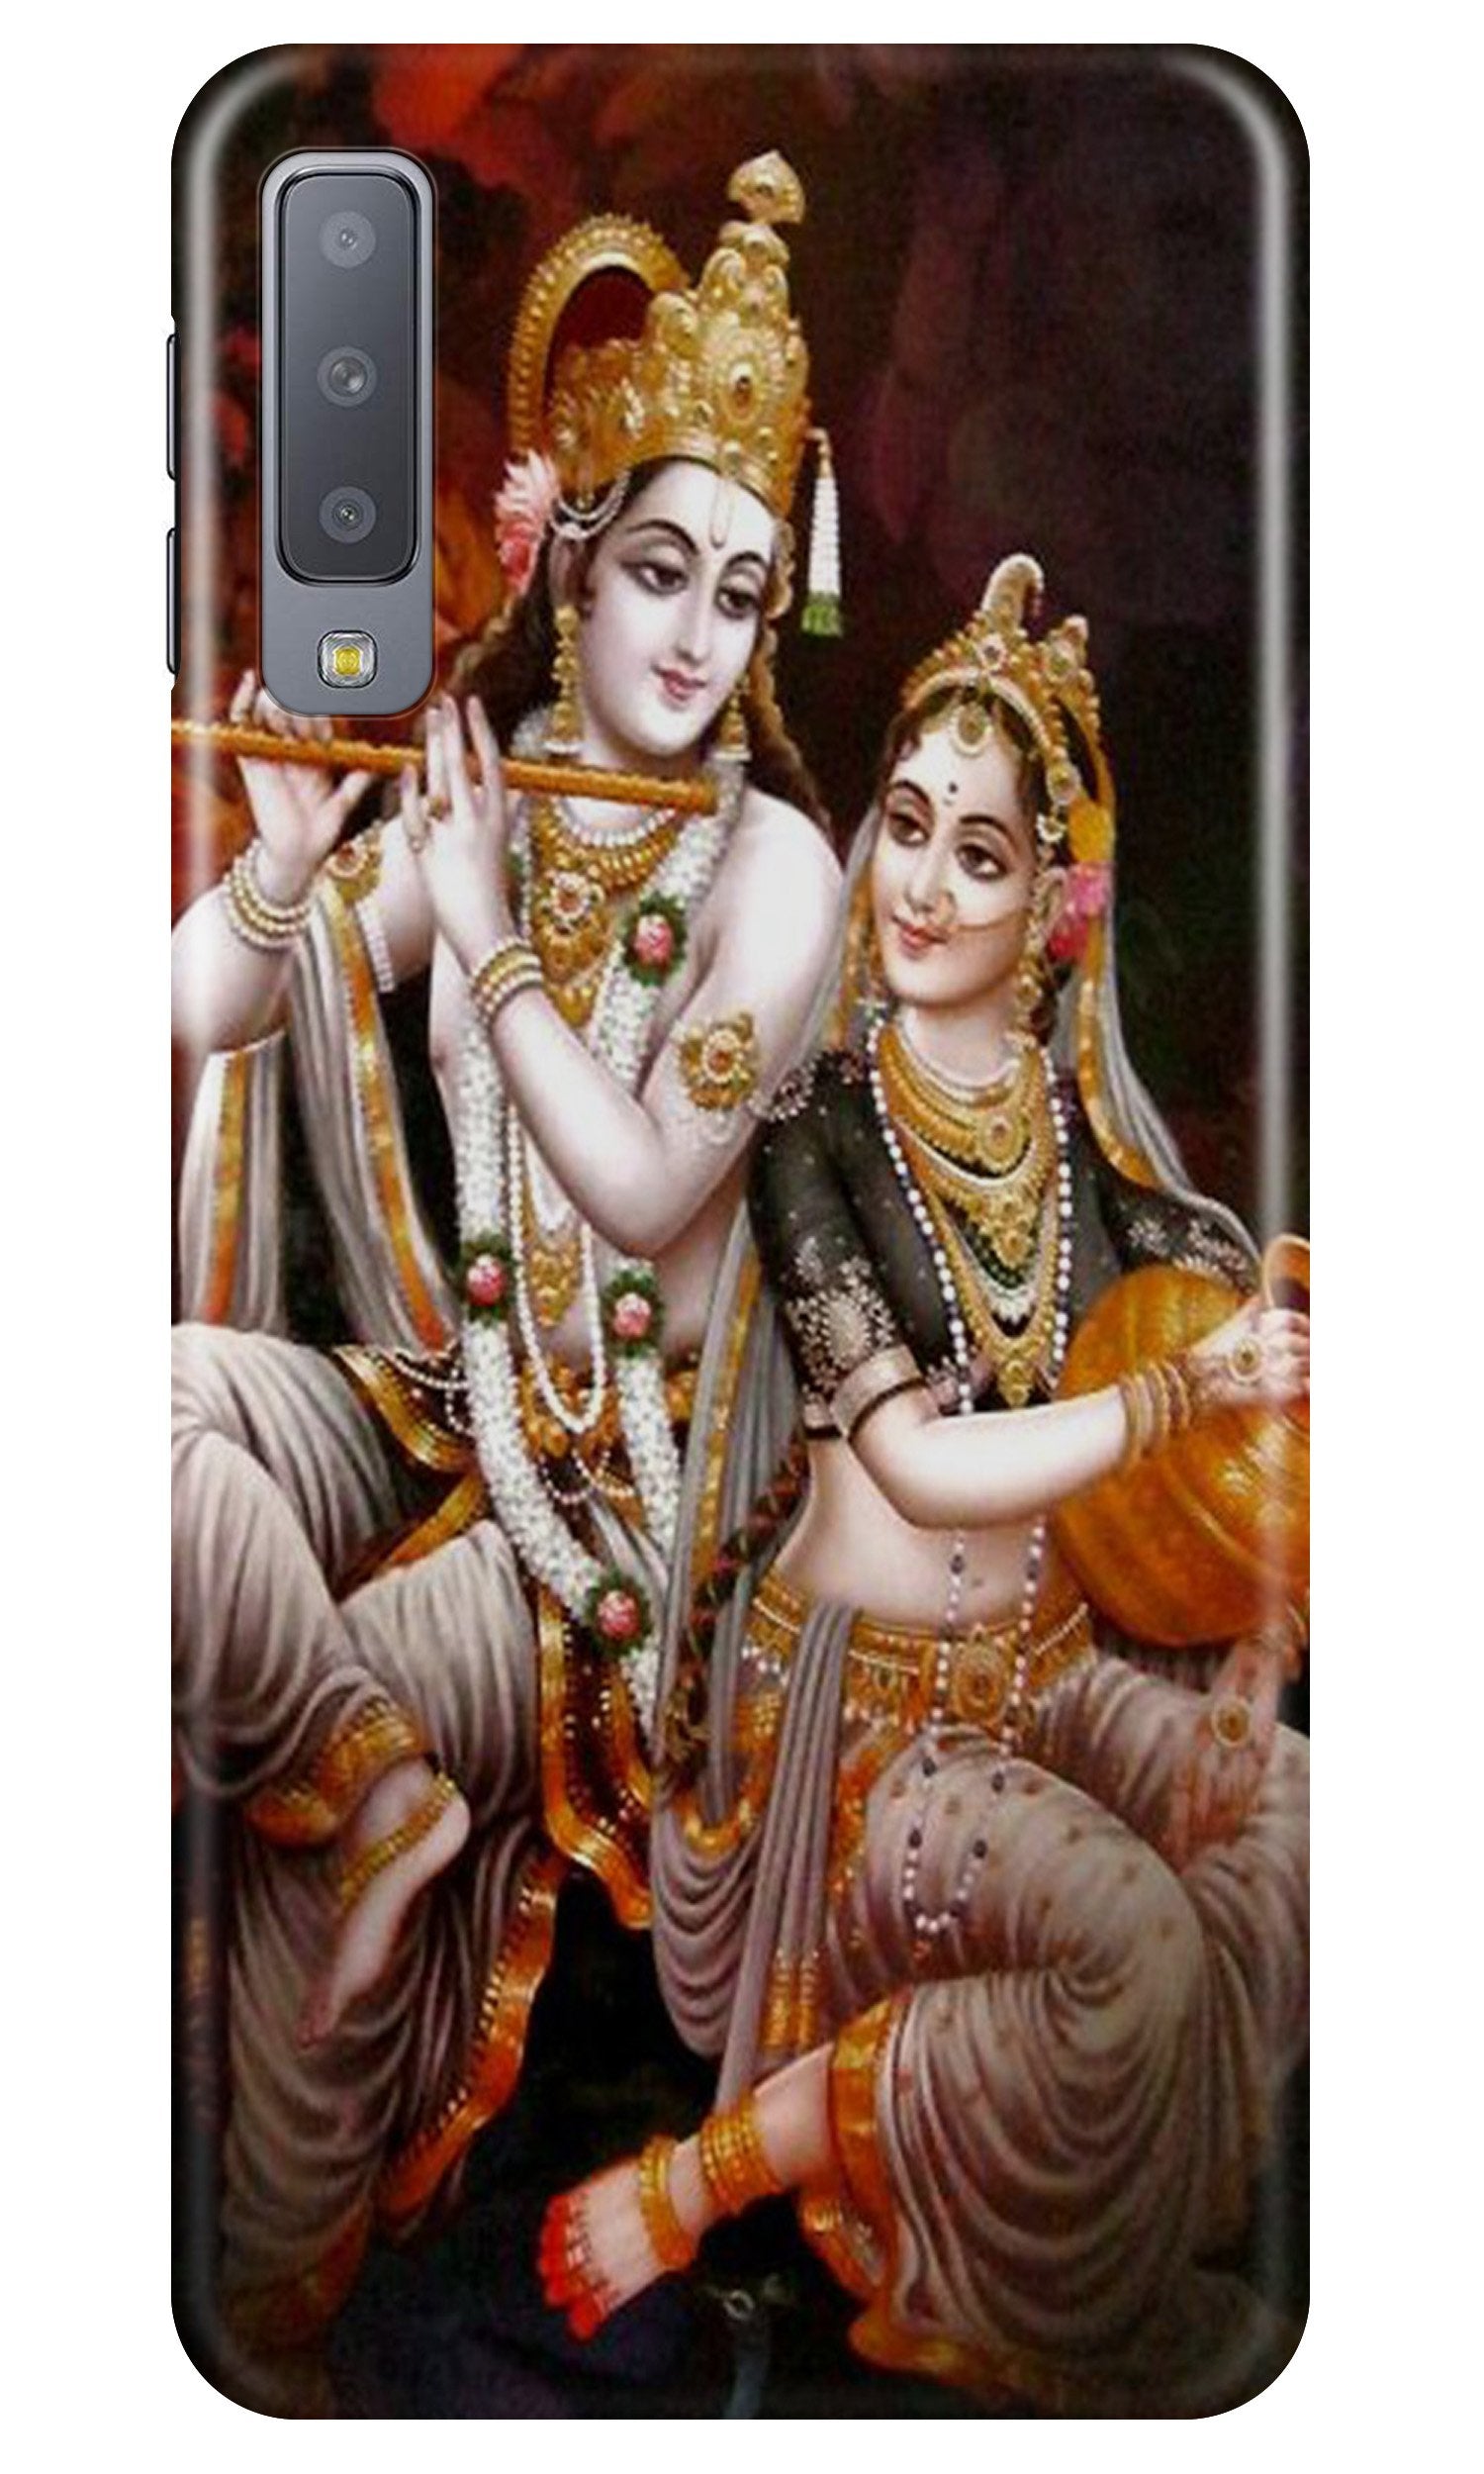 Radha Krishna Case for Samung Galaxy A70s (Design No. 292)